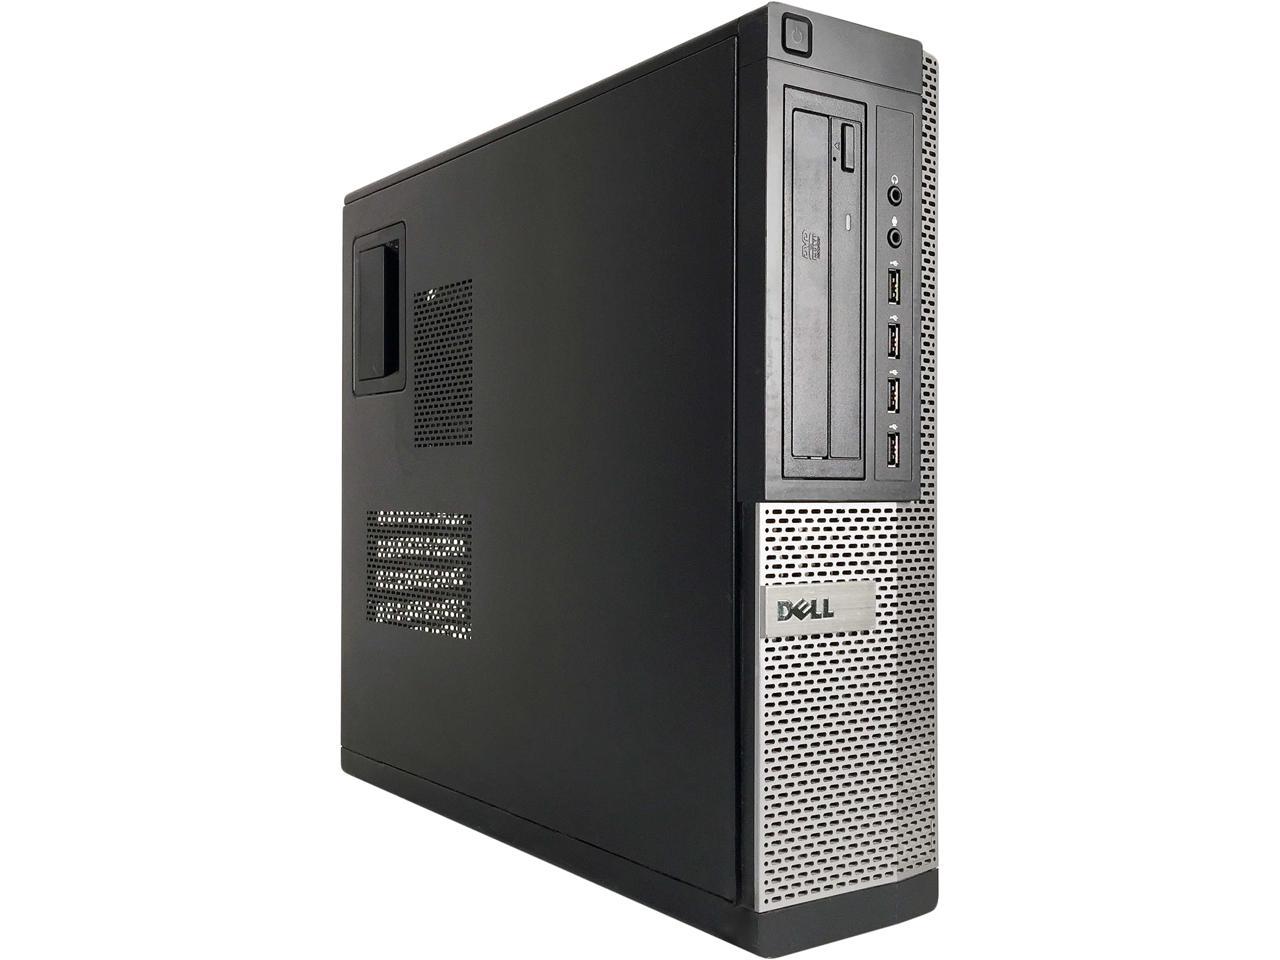 Dell Grade A OptiPlex 790 Desktop Computer, Intel Core i7 2600 (3.40 GHz), 12GB DDR3, 512G SSD, DVD, USB WIFI Adapter, USB Bluetooth Adapter, Windows 10 Home 64-bit Multi-language